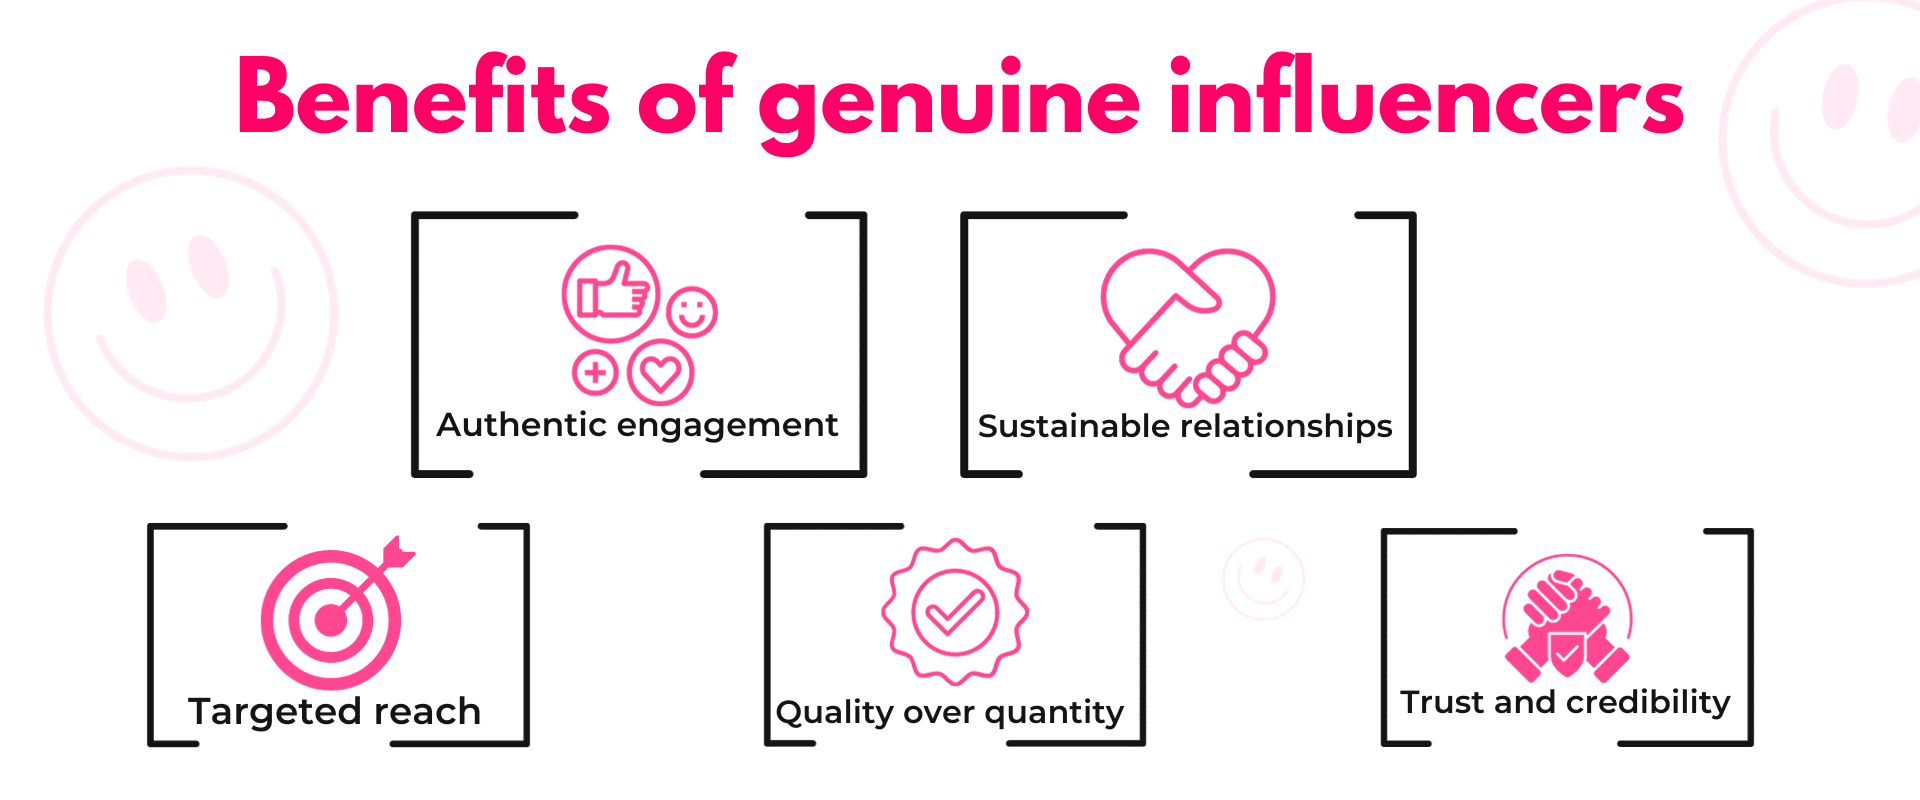 Benefits of genuine influencers.